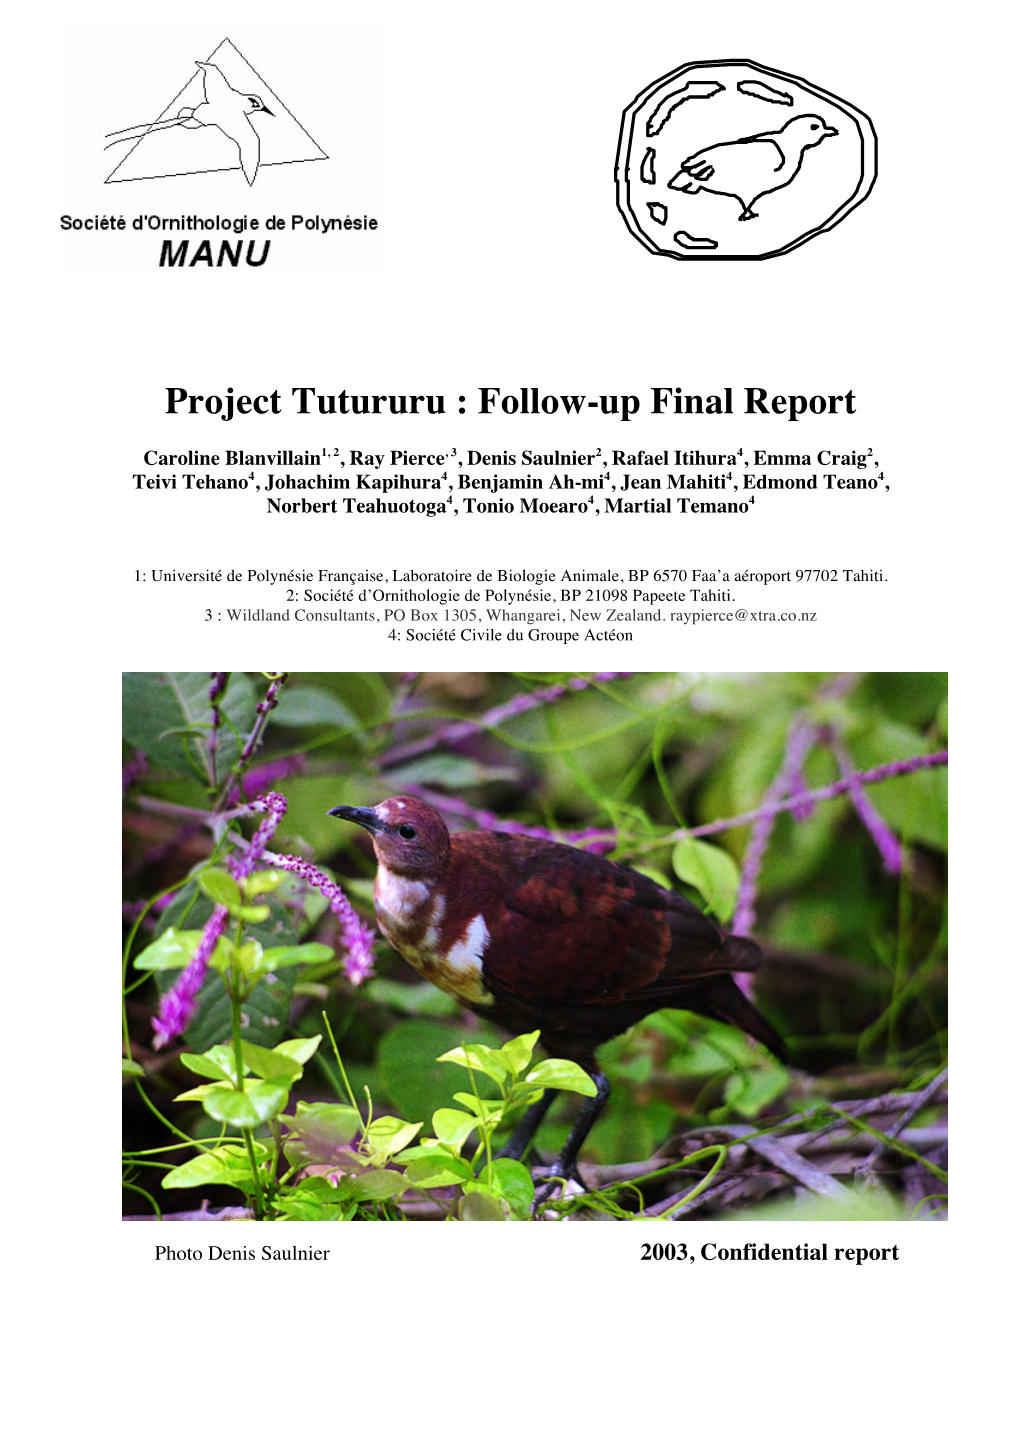 Project Tutururu : Follow-Up Final Report